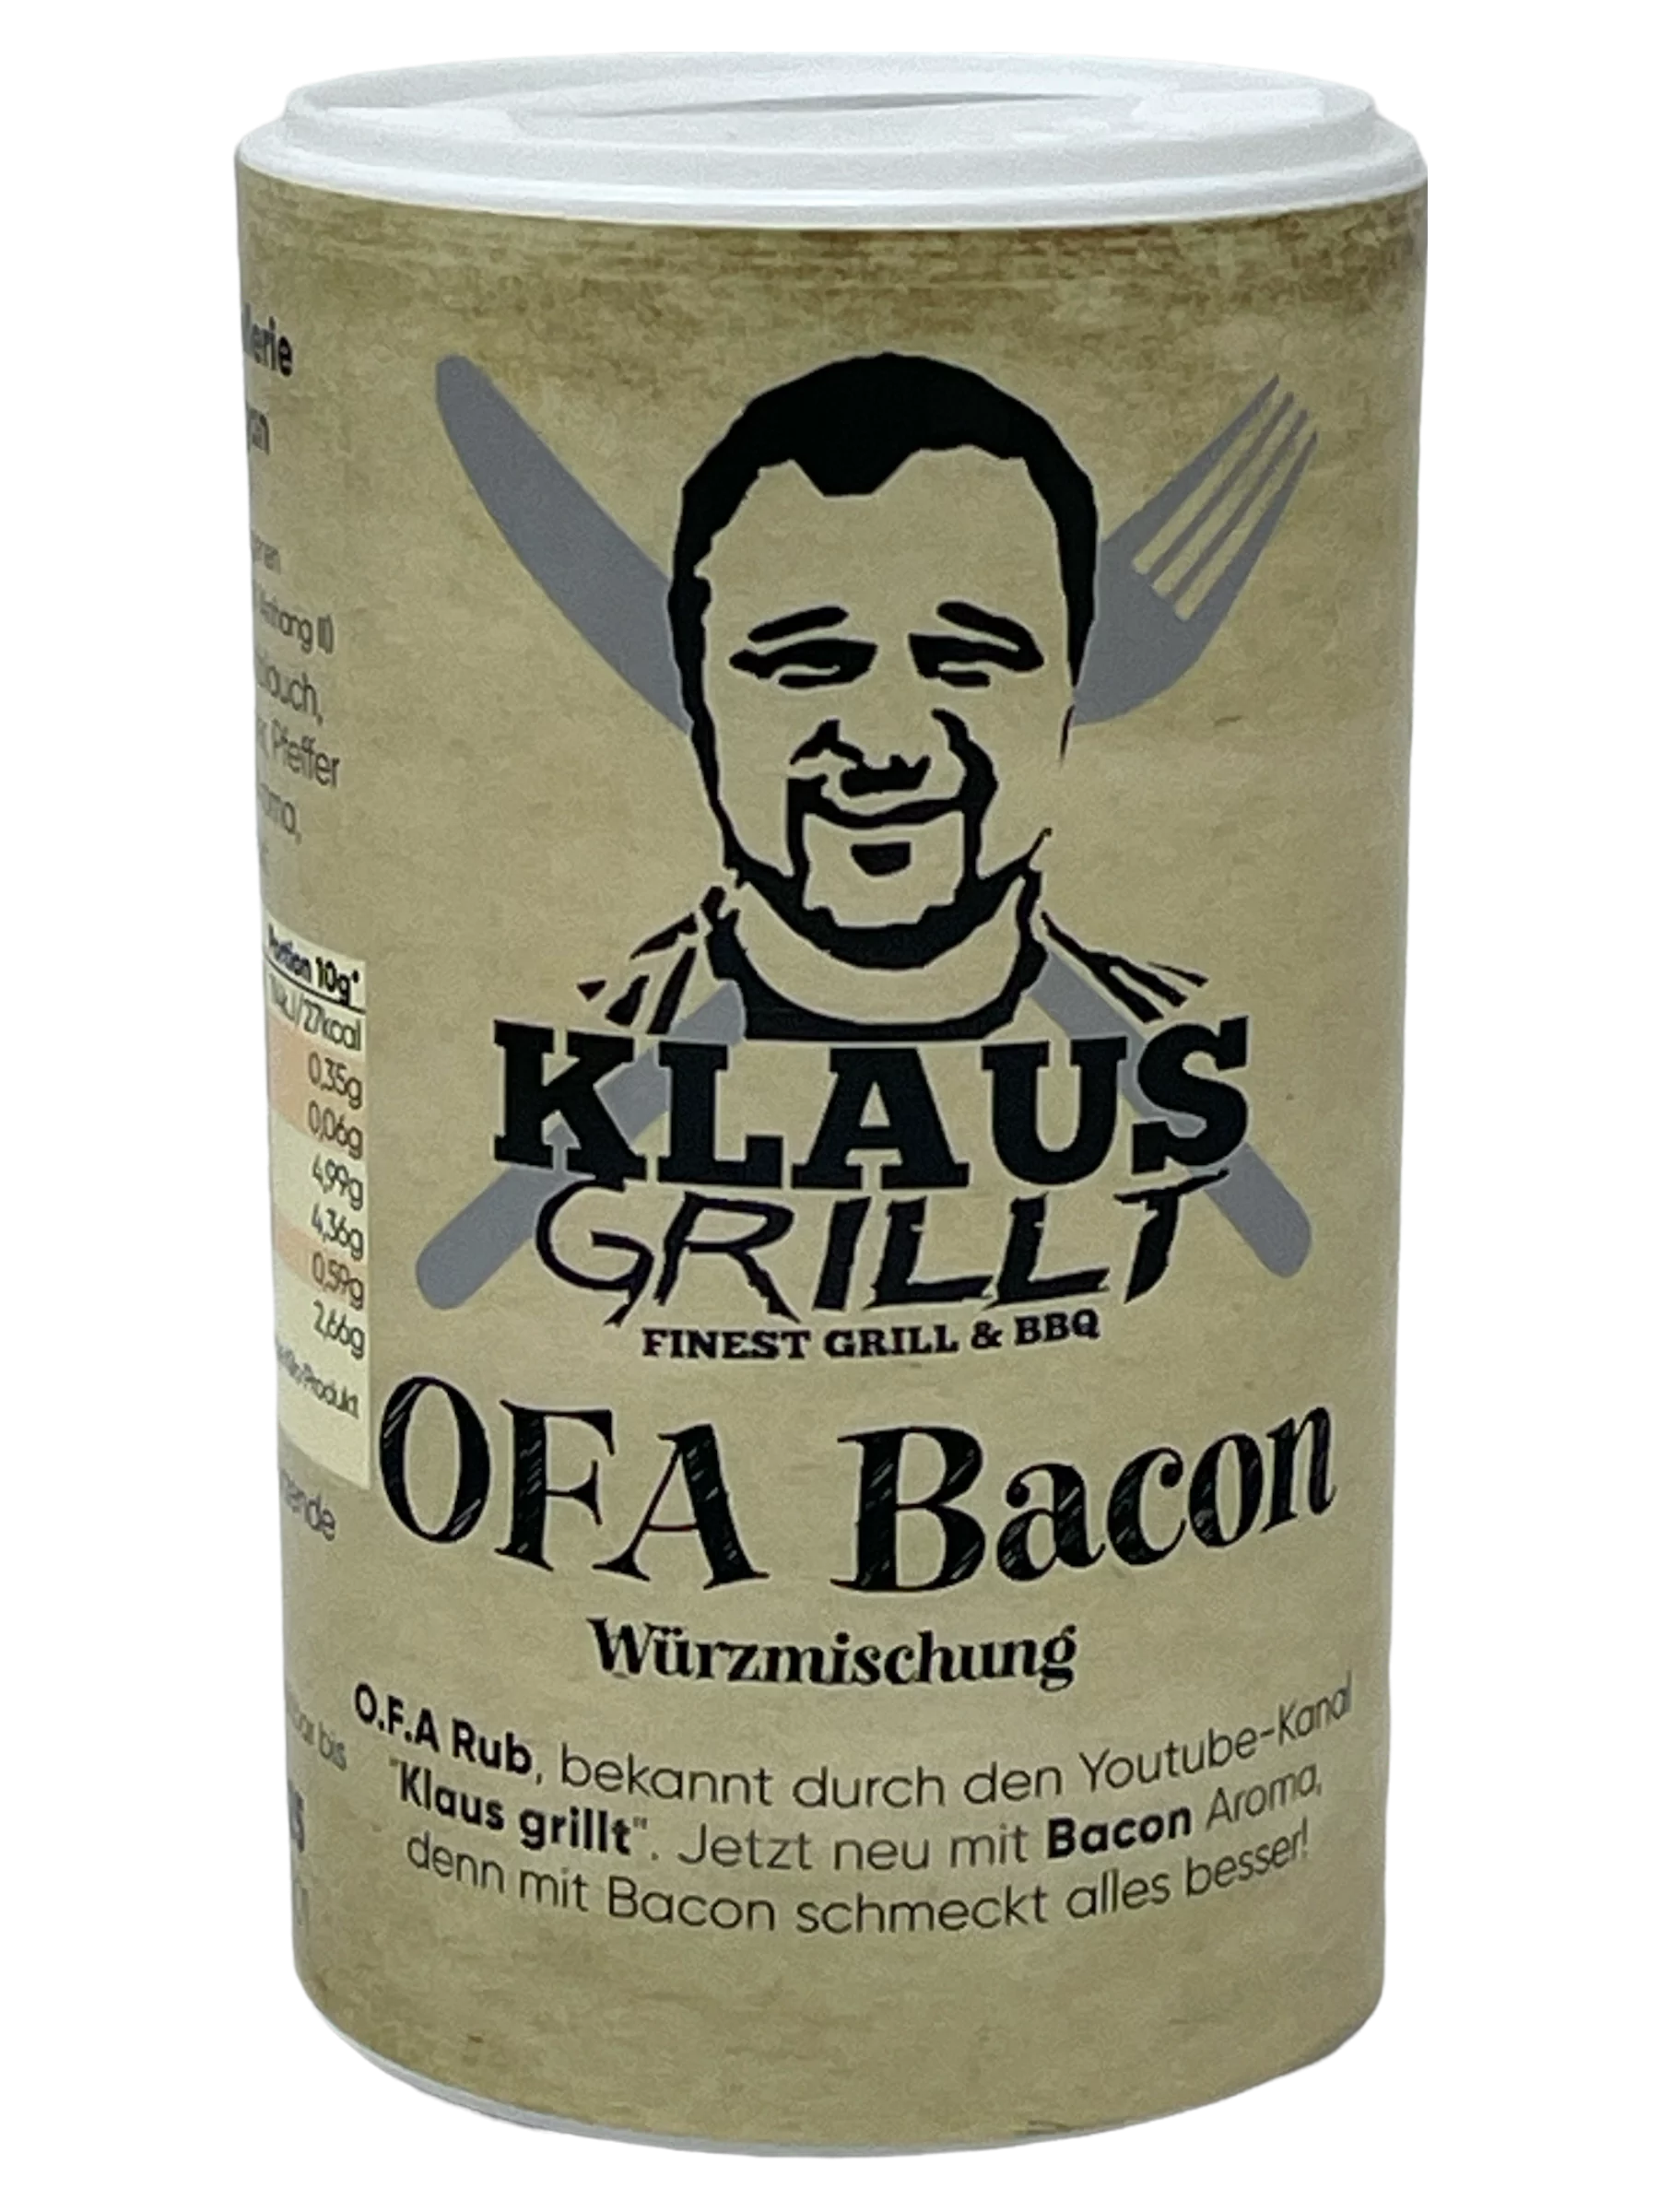 Klaus grillt, OFA Bacon, 100g Streuer